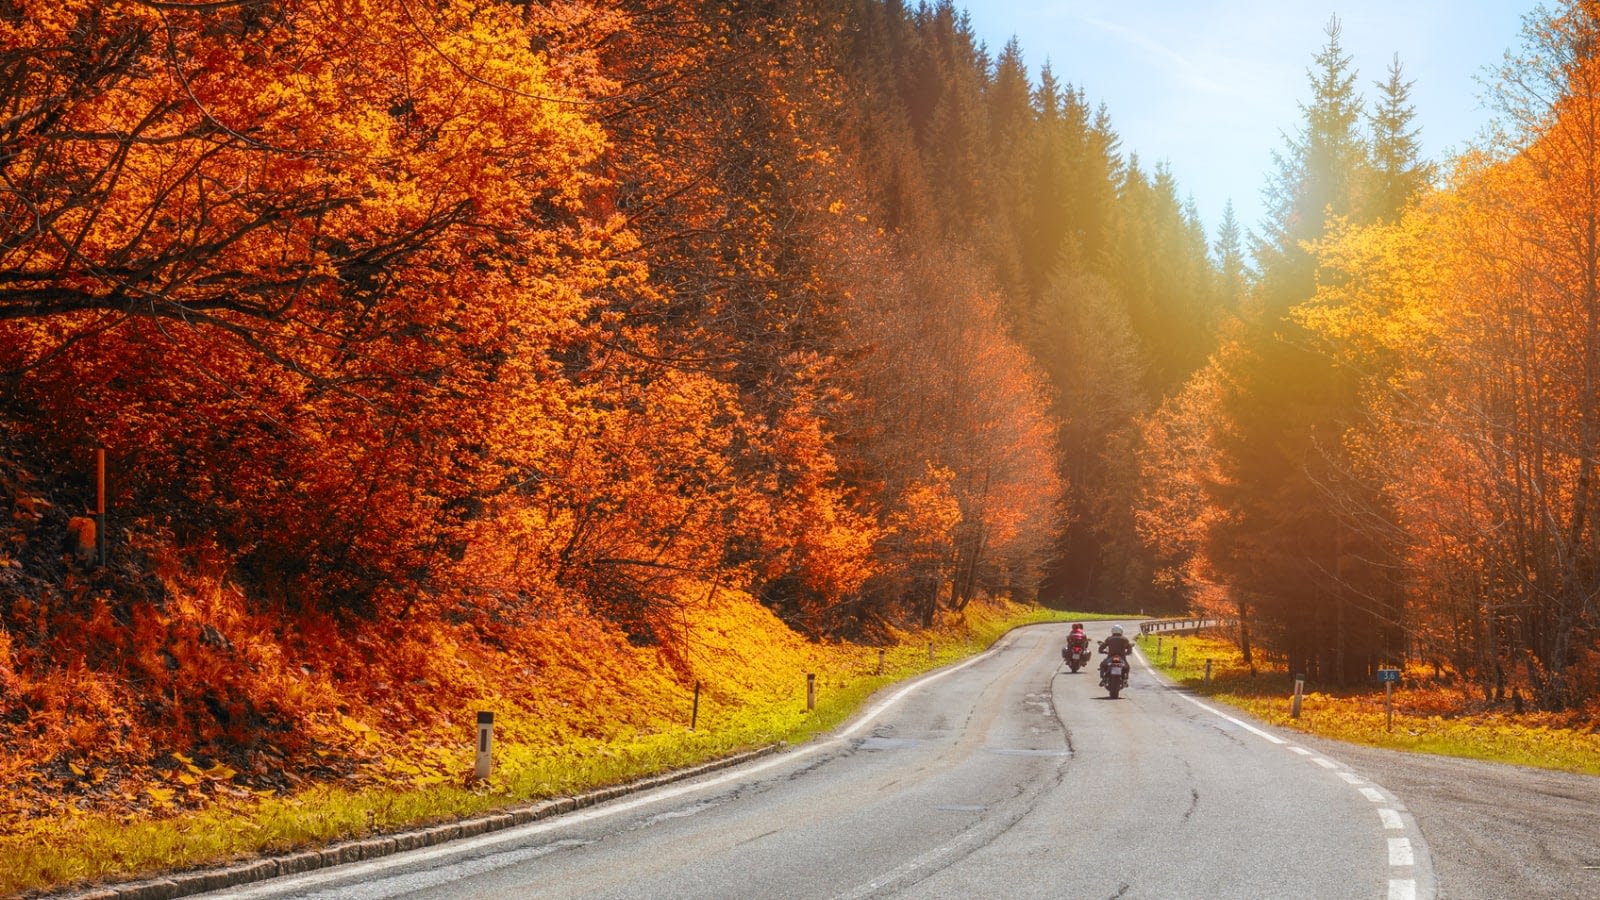 two motorcycles riding through fall foliage